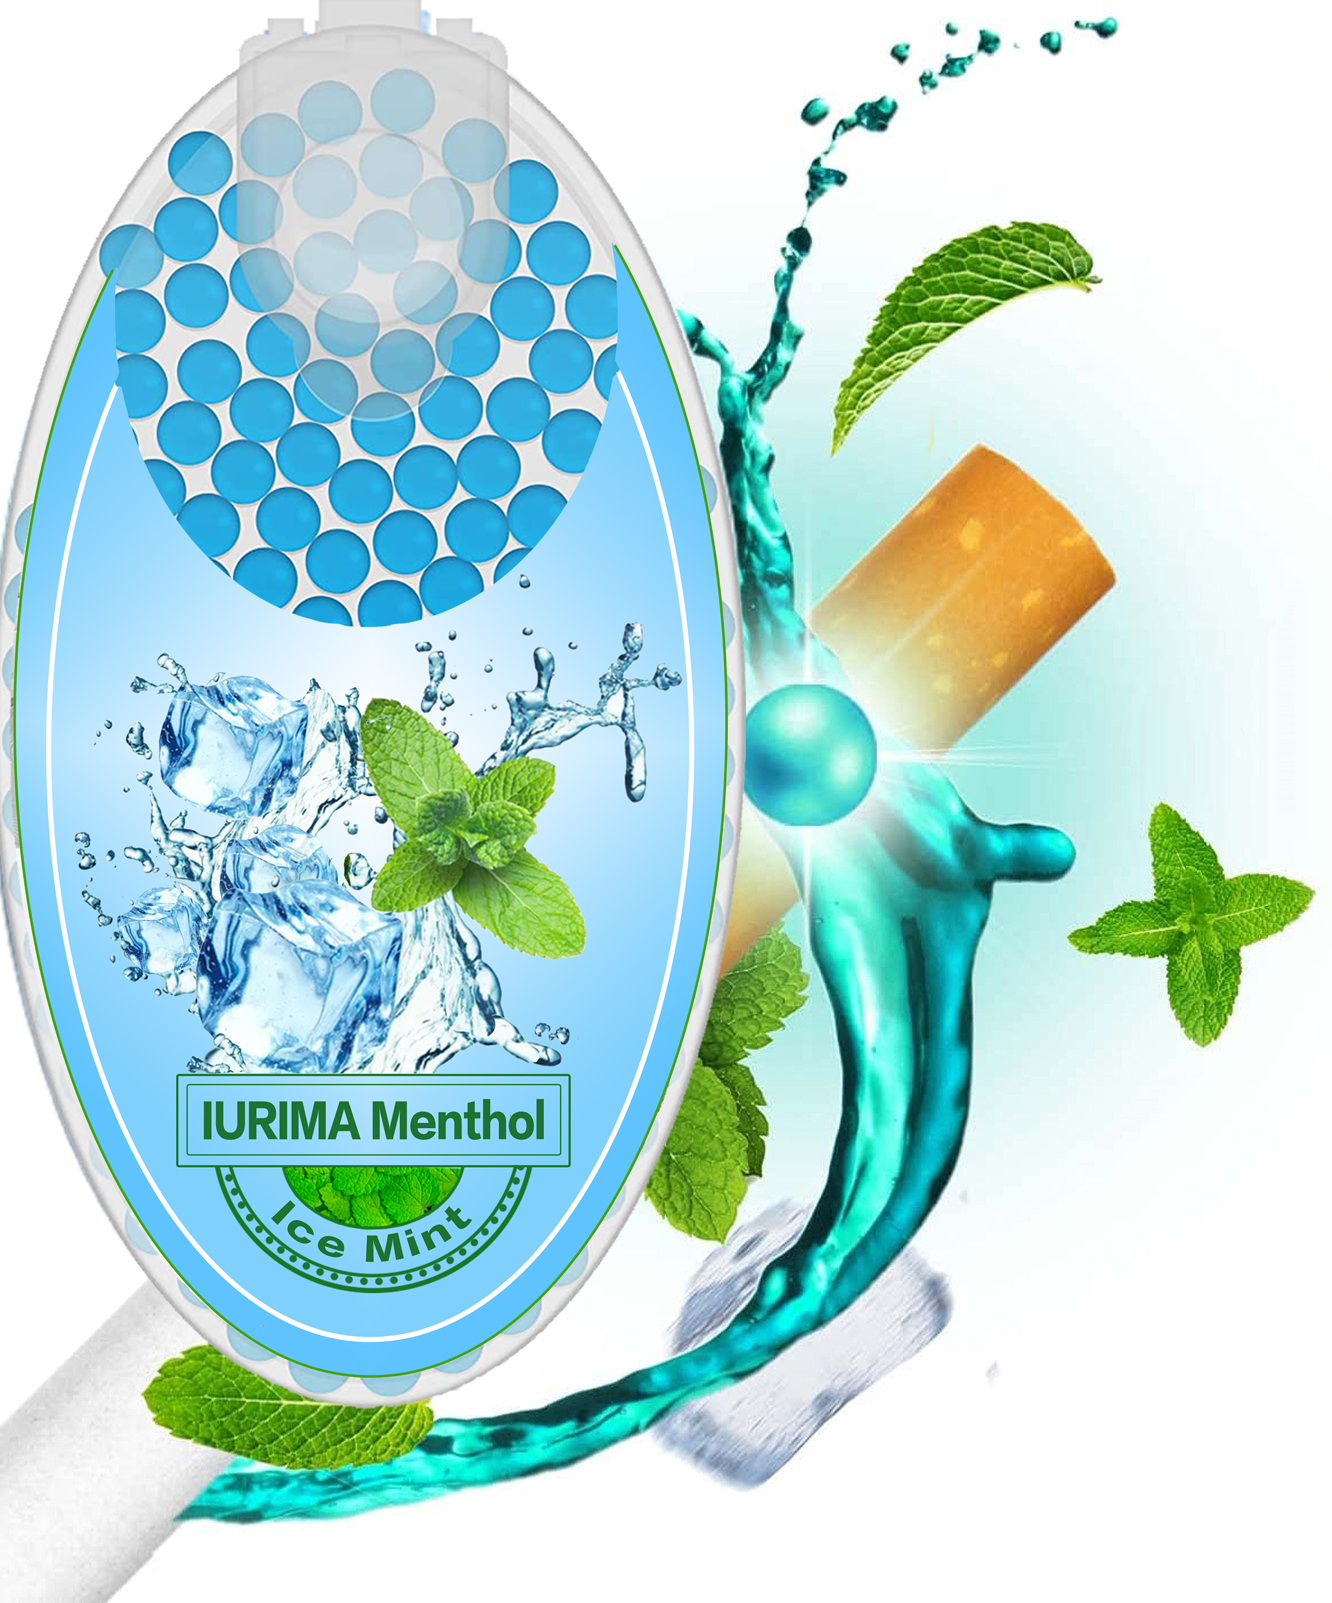 IURIMA Cigarette menthol Balls, 100 Menthol Menthol Aroma Capsules, Flavoring Beads for Filters